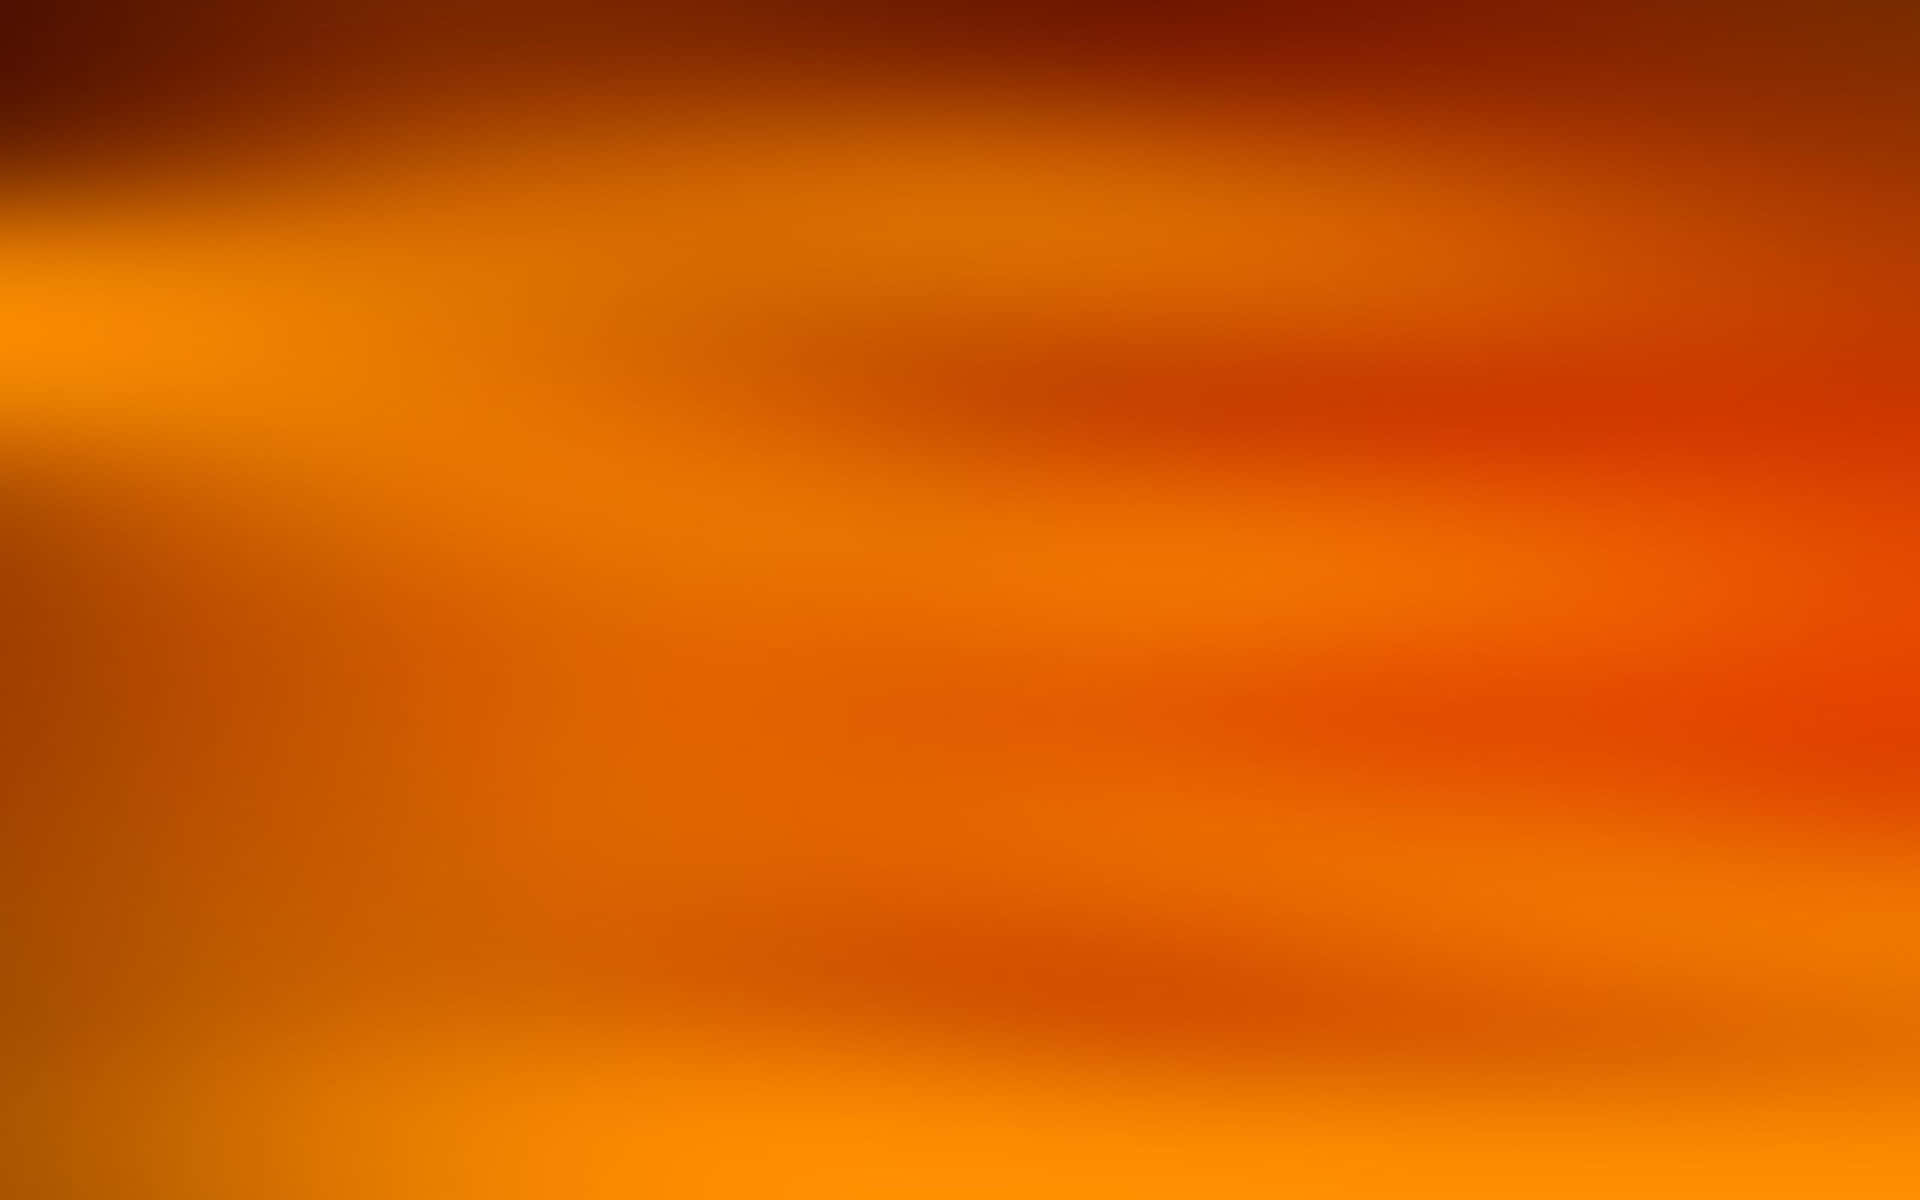 One colour single plain orange solid 3120x1440 wallpaper 4K HD